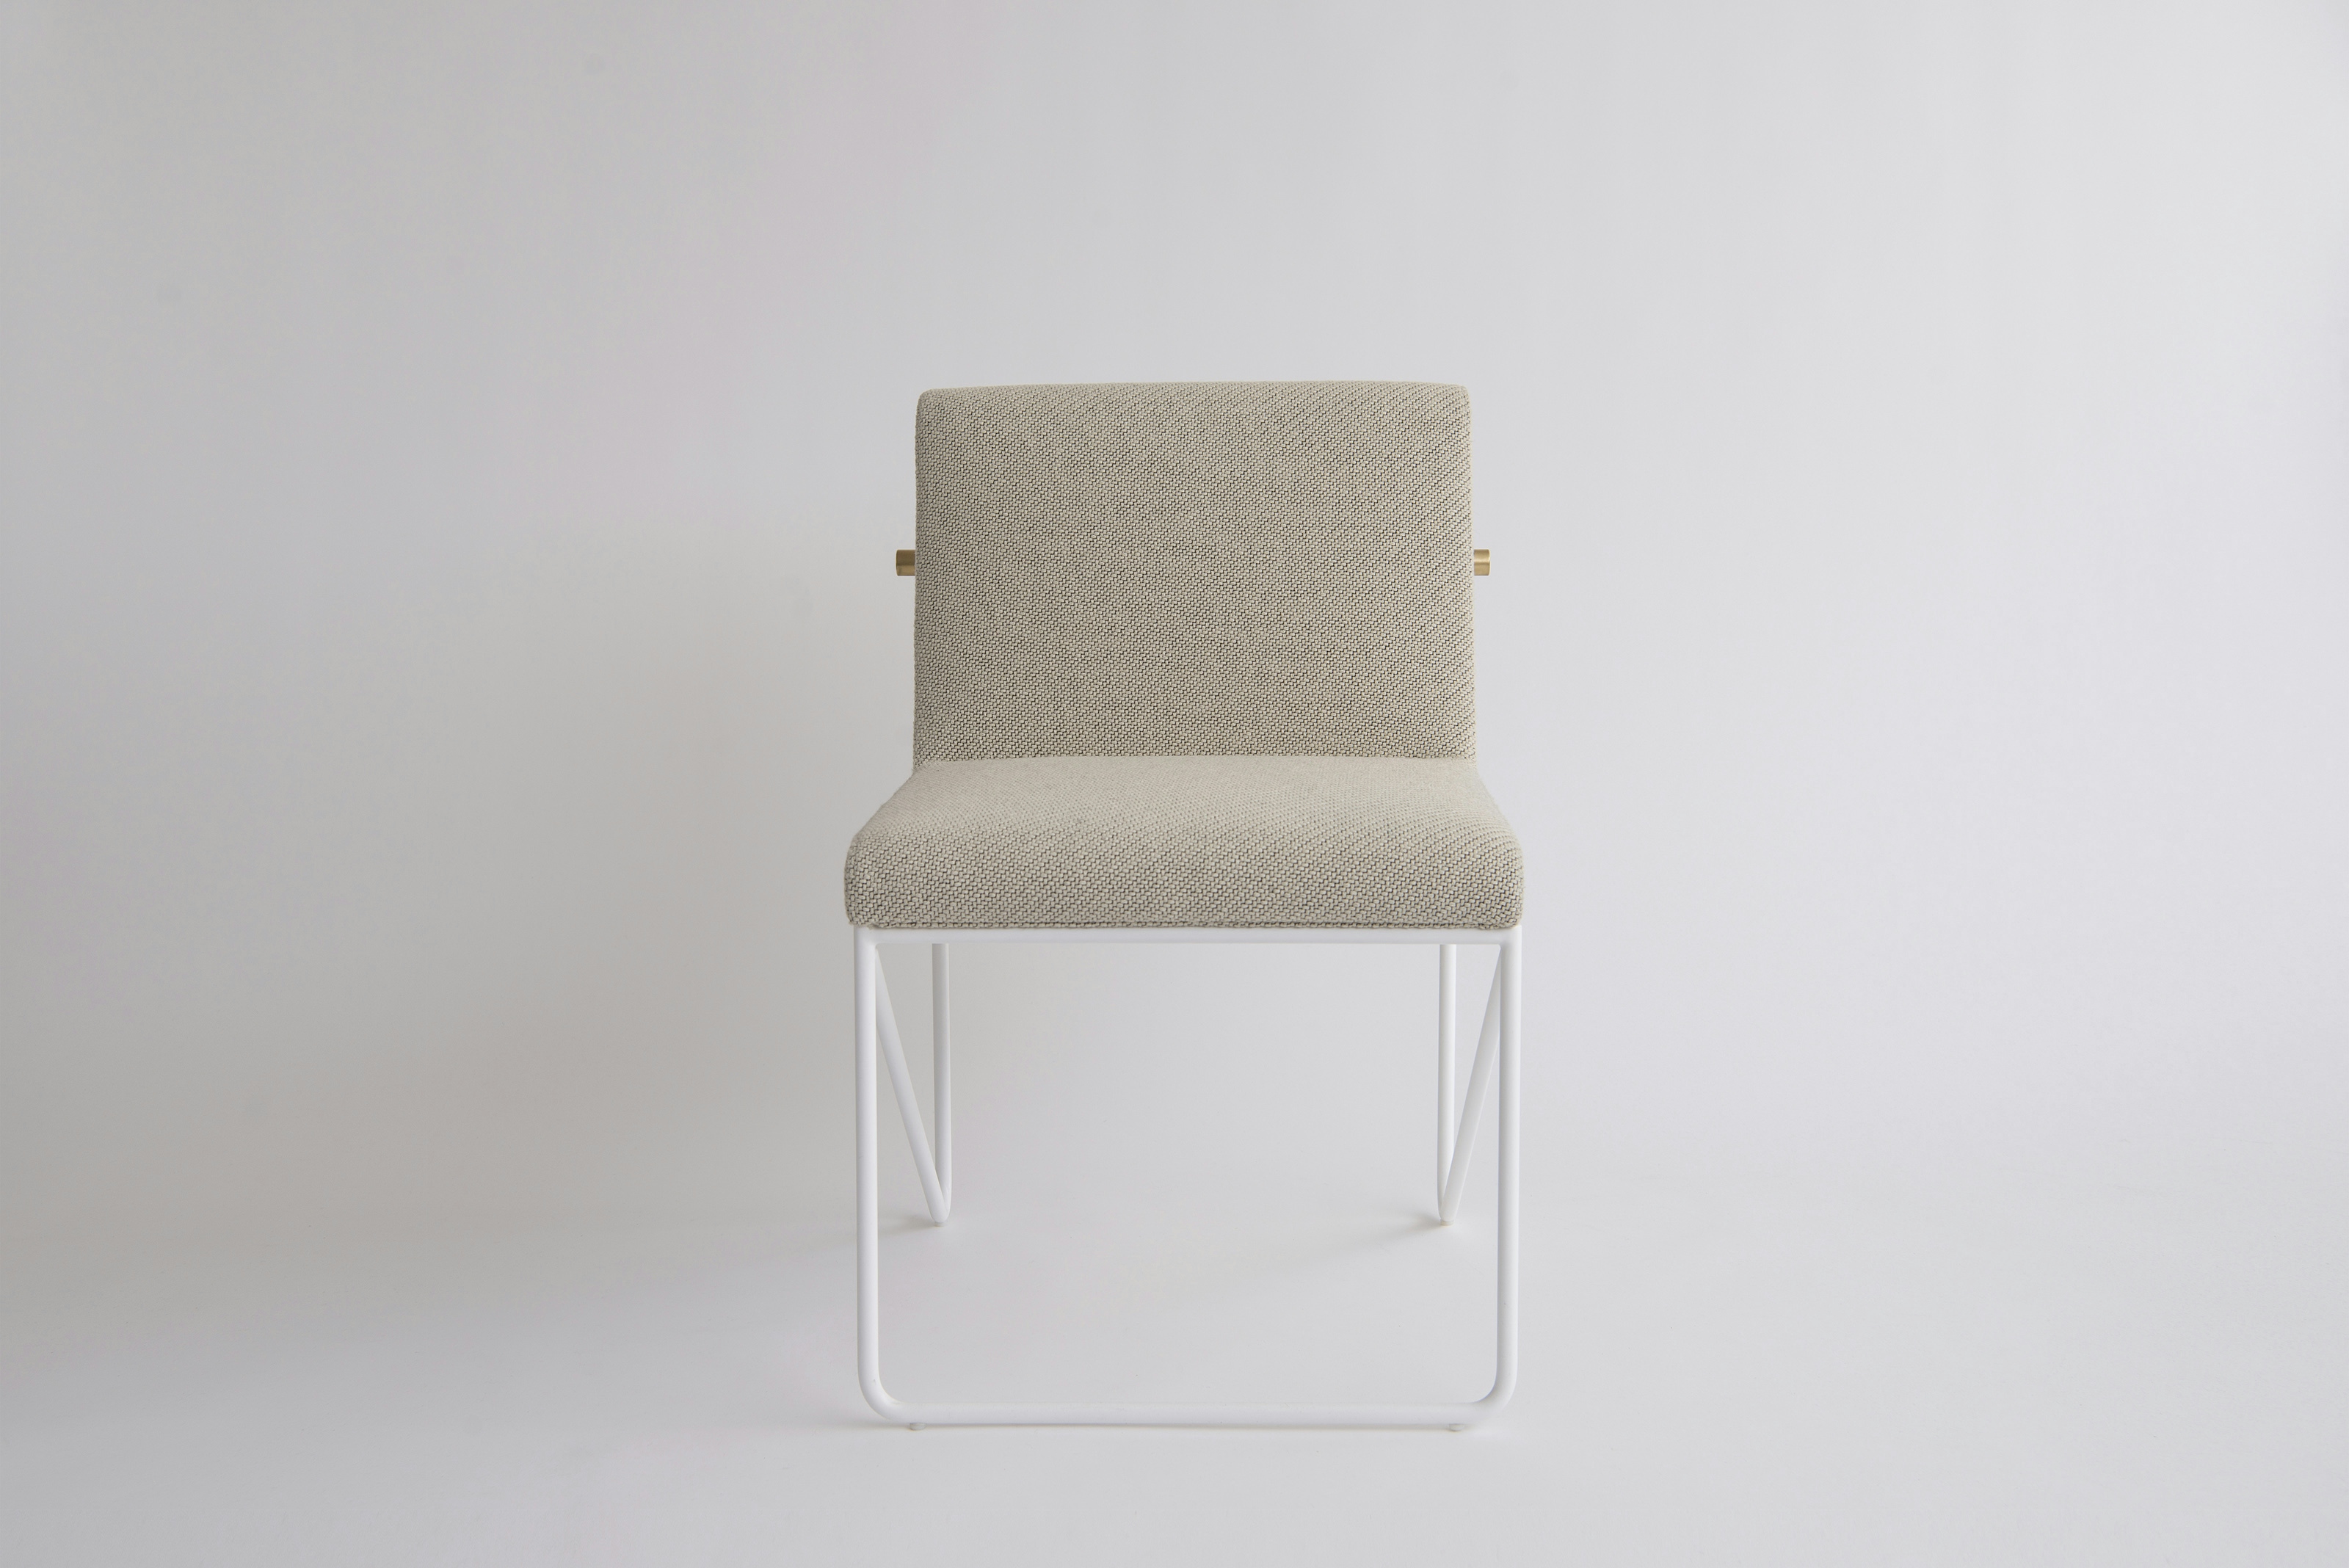 Phase Design Reza Feiz Kickstand Side Chair Armless 1 Web